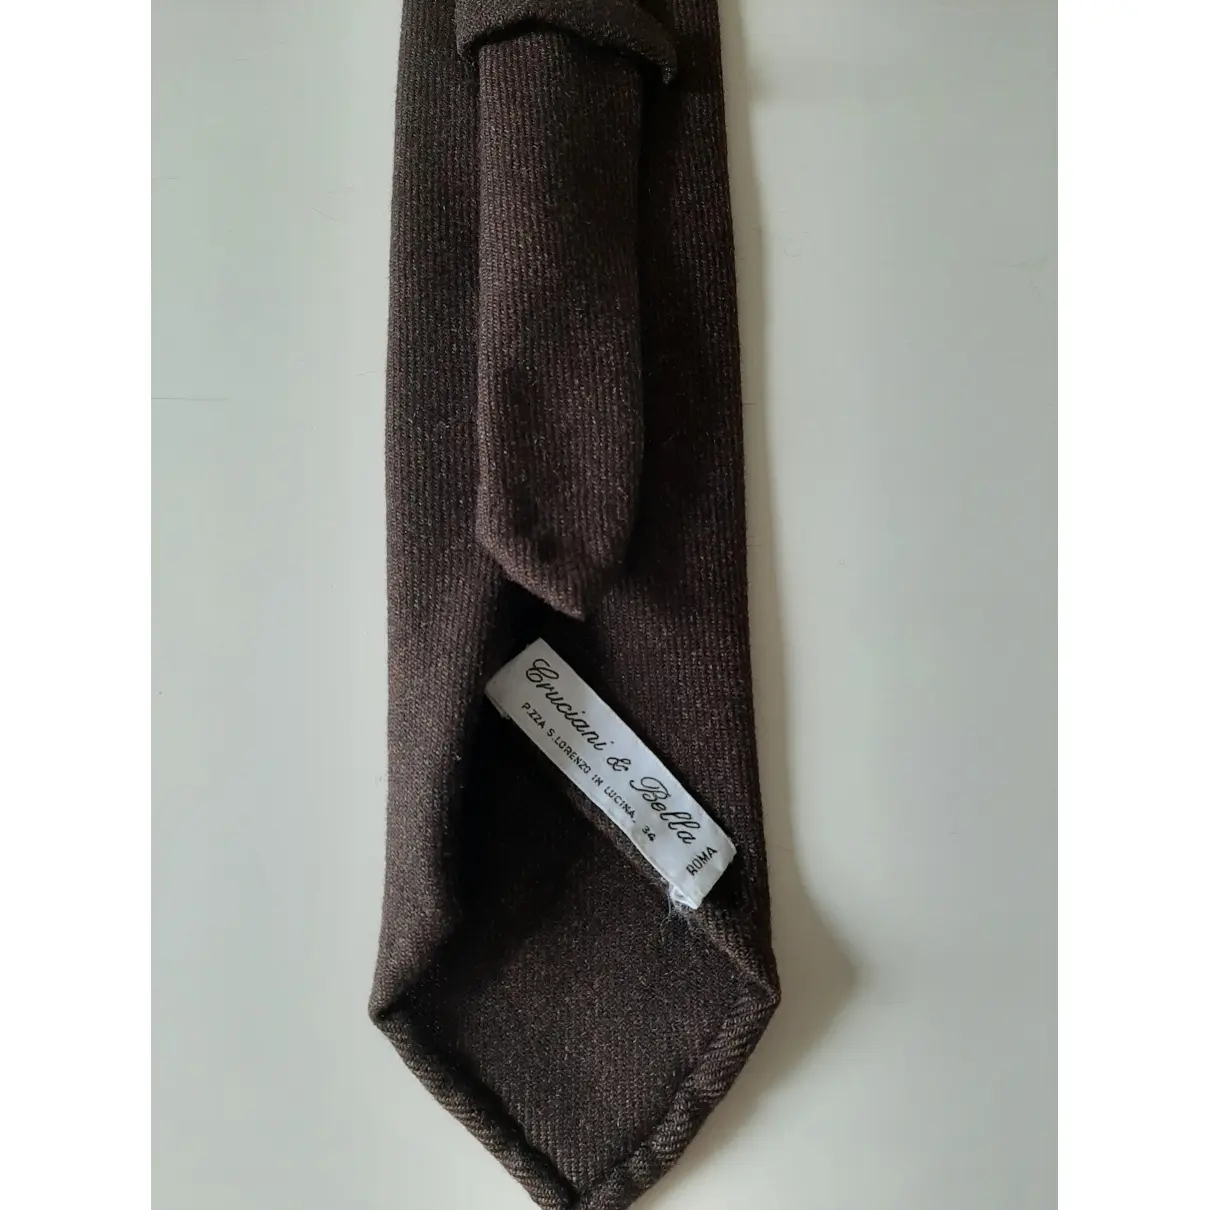 Buy Cruciani Wool tie online